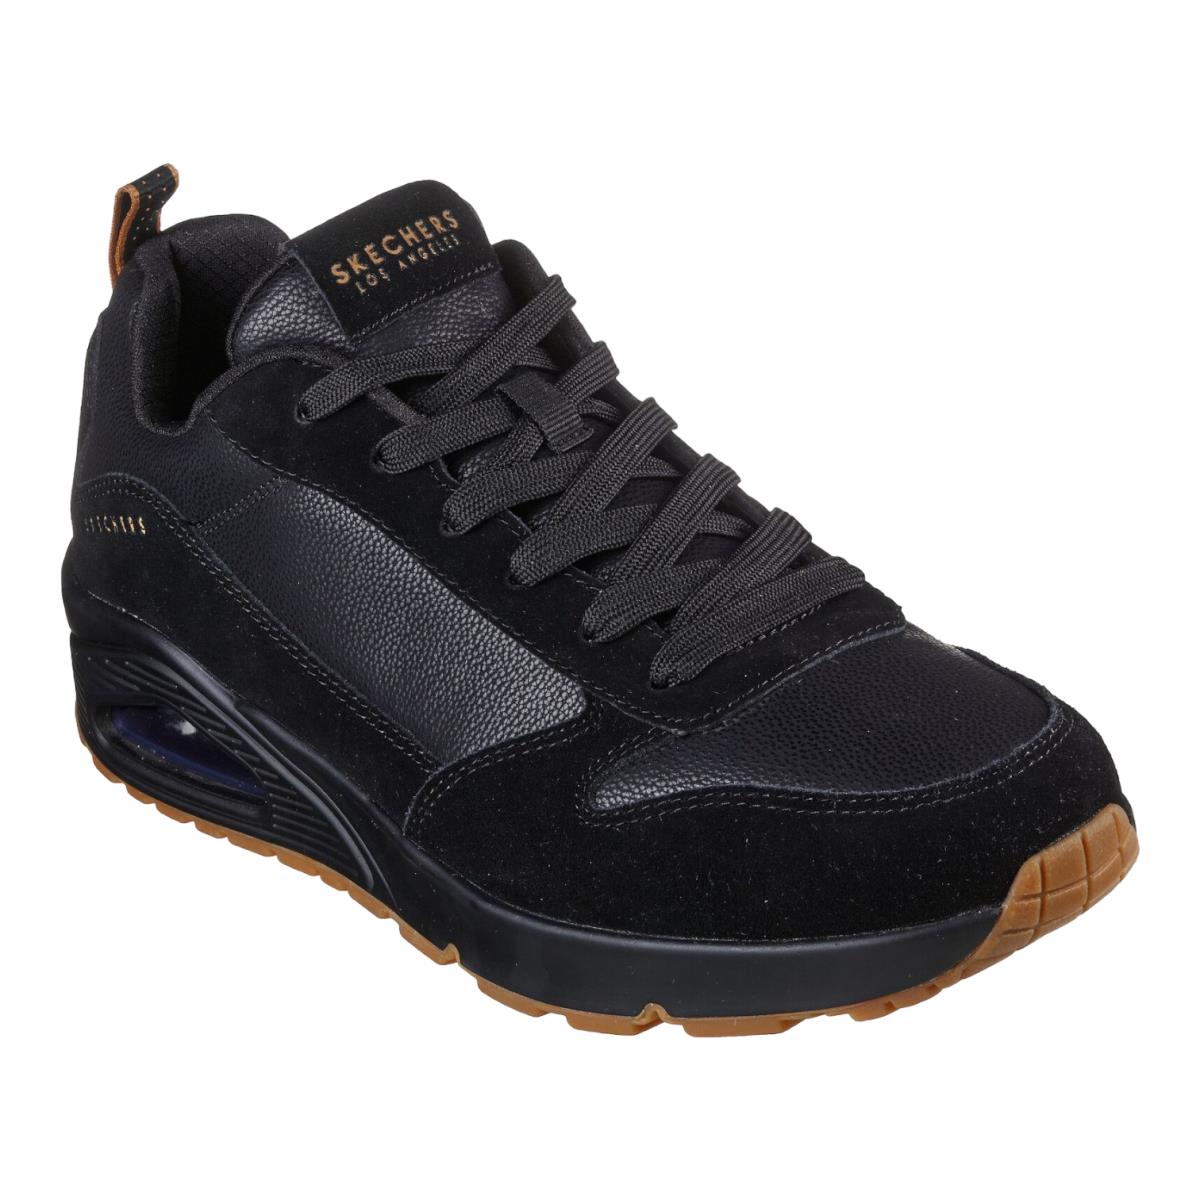 Mens Skechers Uno Stacre Sneakers - Black Suede Size 11 M US 52468/BBK - Black